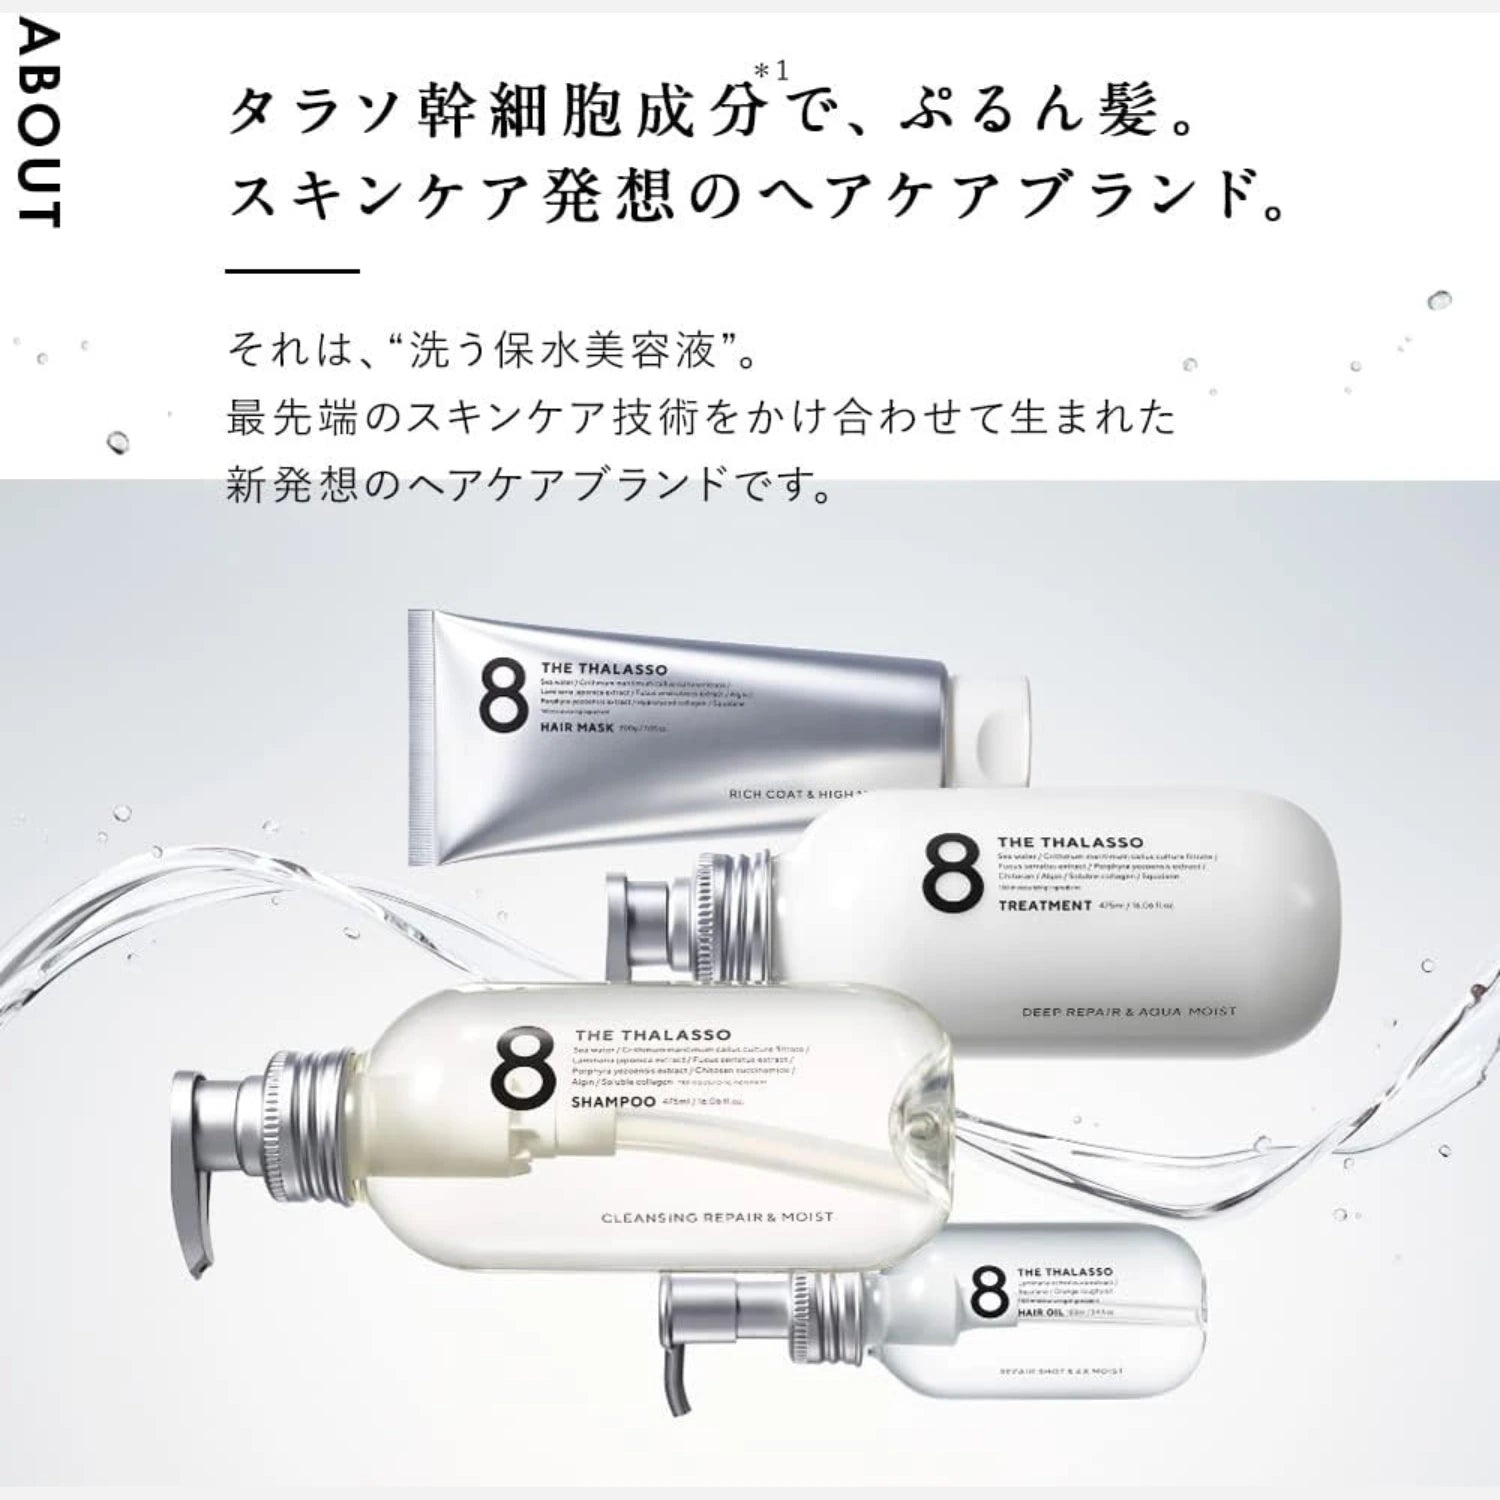 8 The Thalasso Smooth Repair & Aqua Serum Shampoo and Treatment Set (475ml Each) - Buy Me Japan